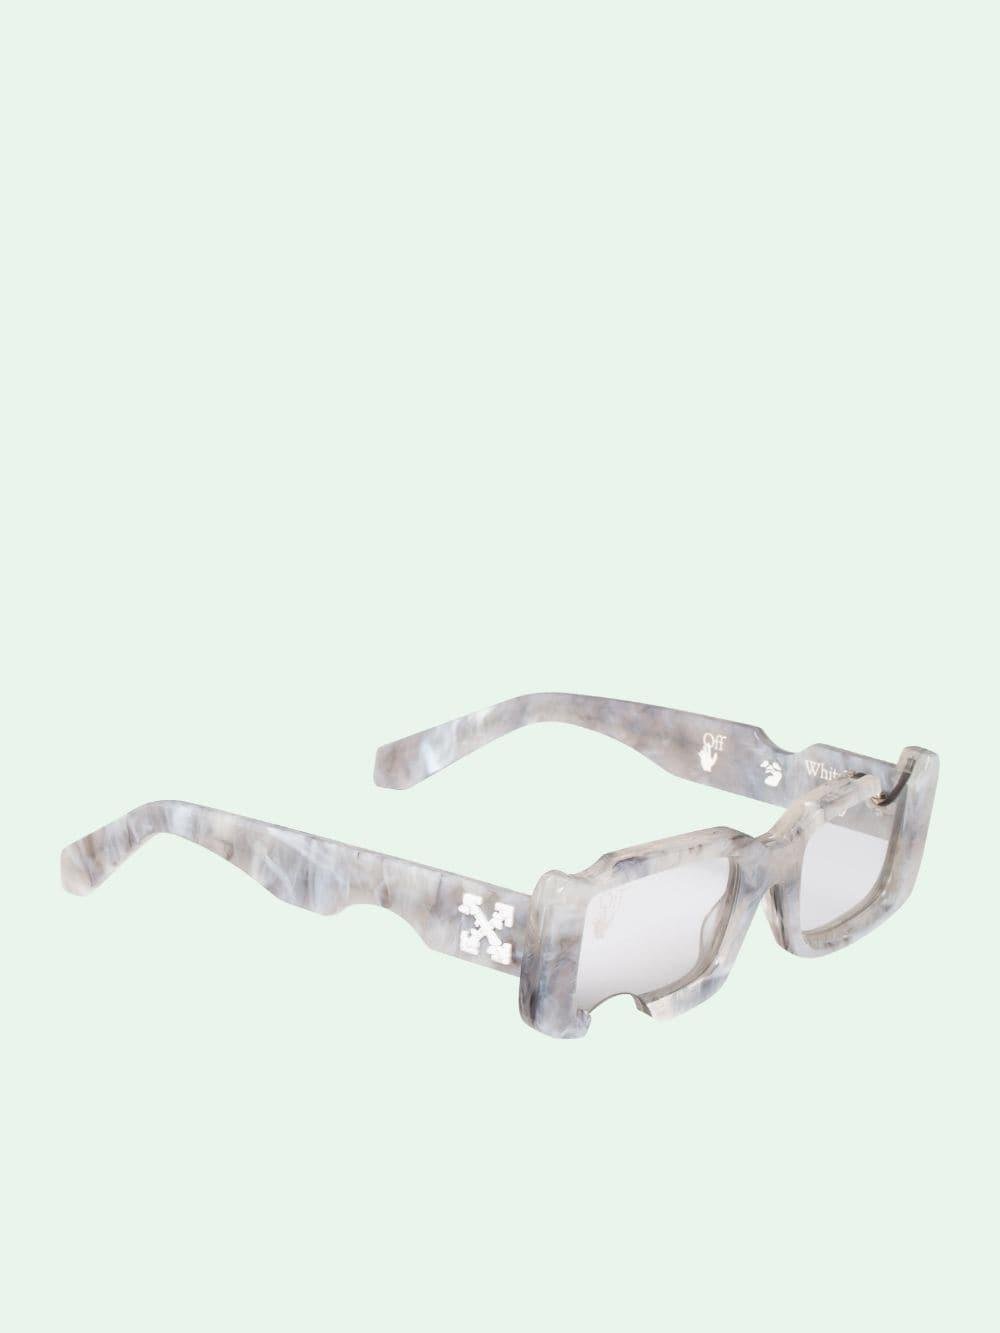 Off-White c/o Virgil Abloh Carrara Square Frame Sunglasses in White